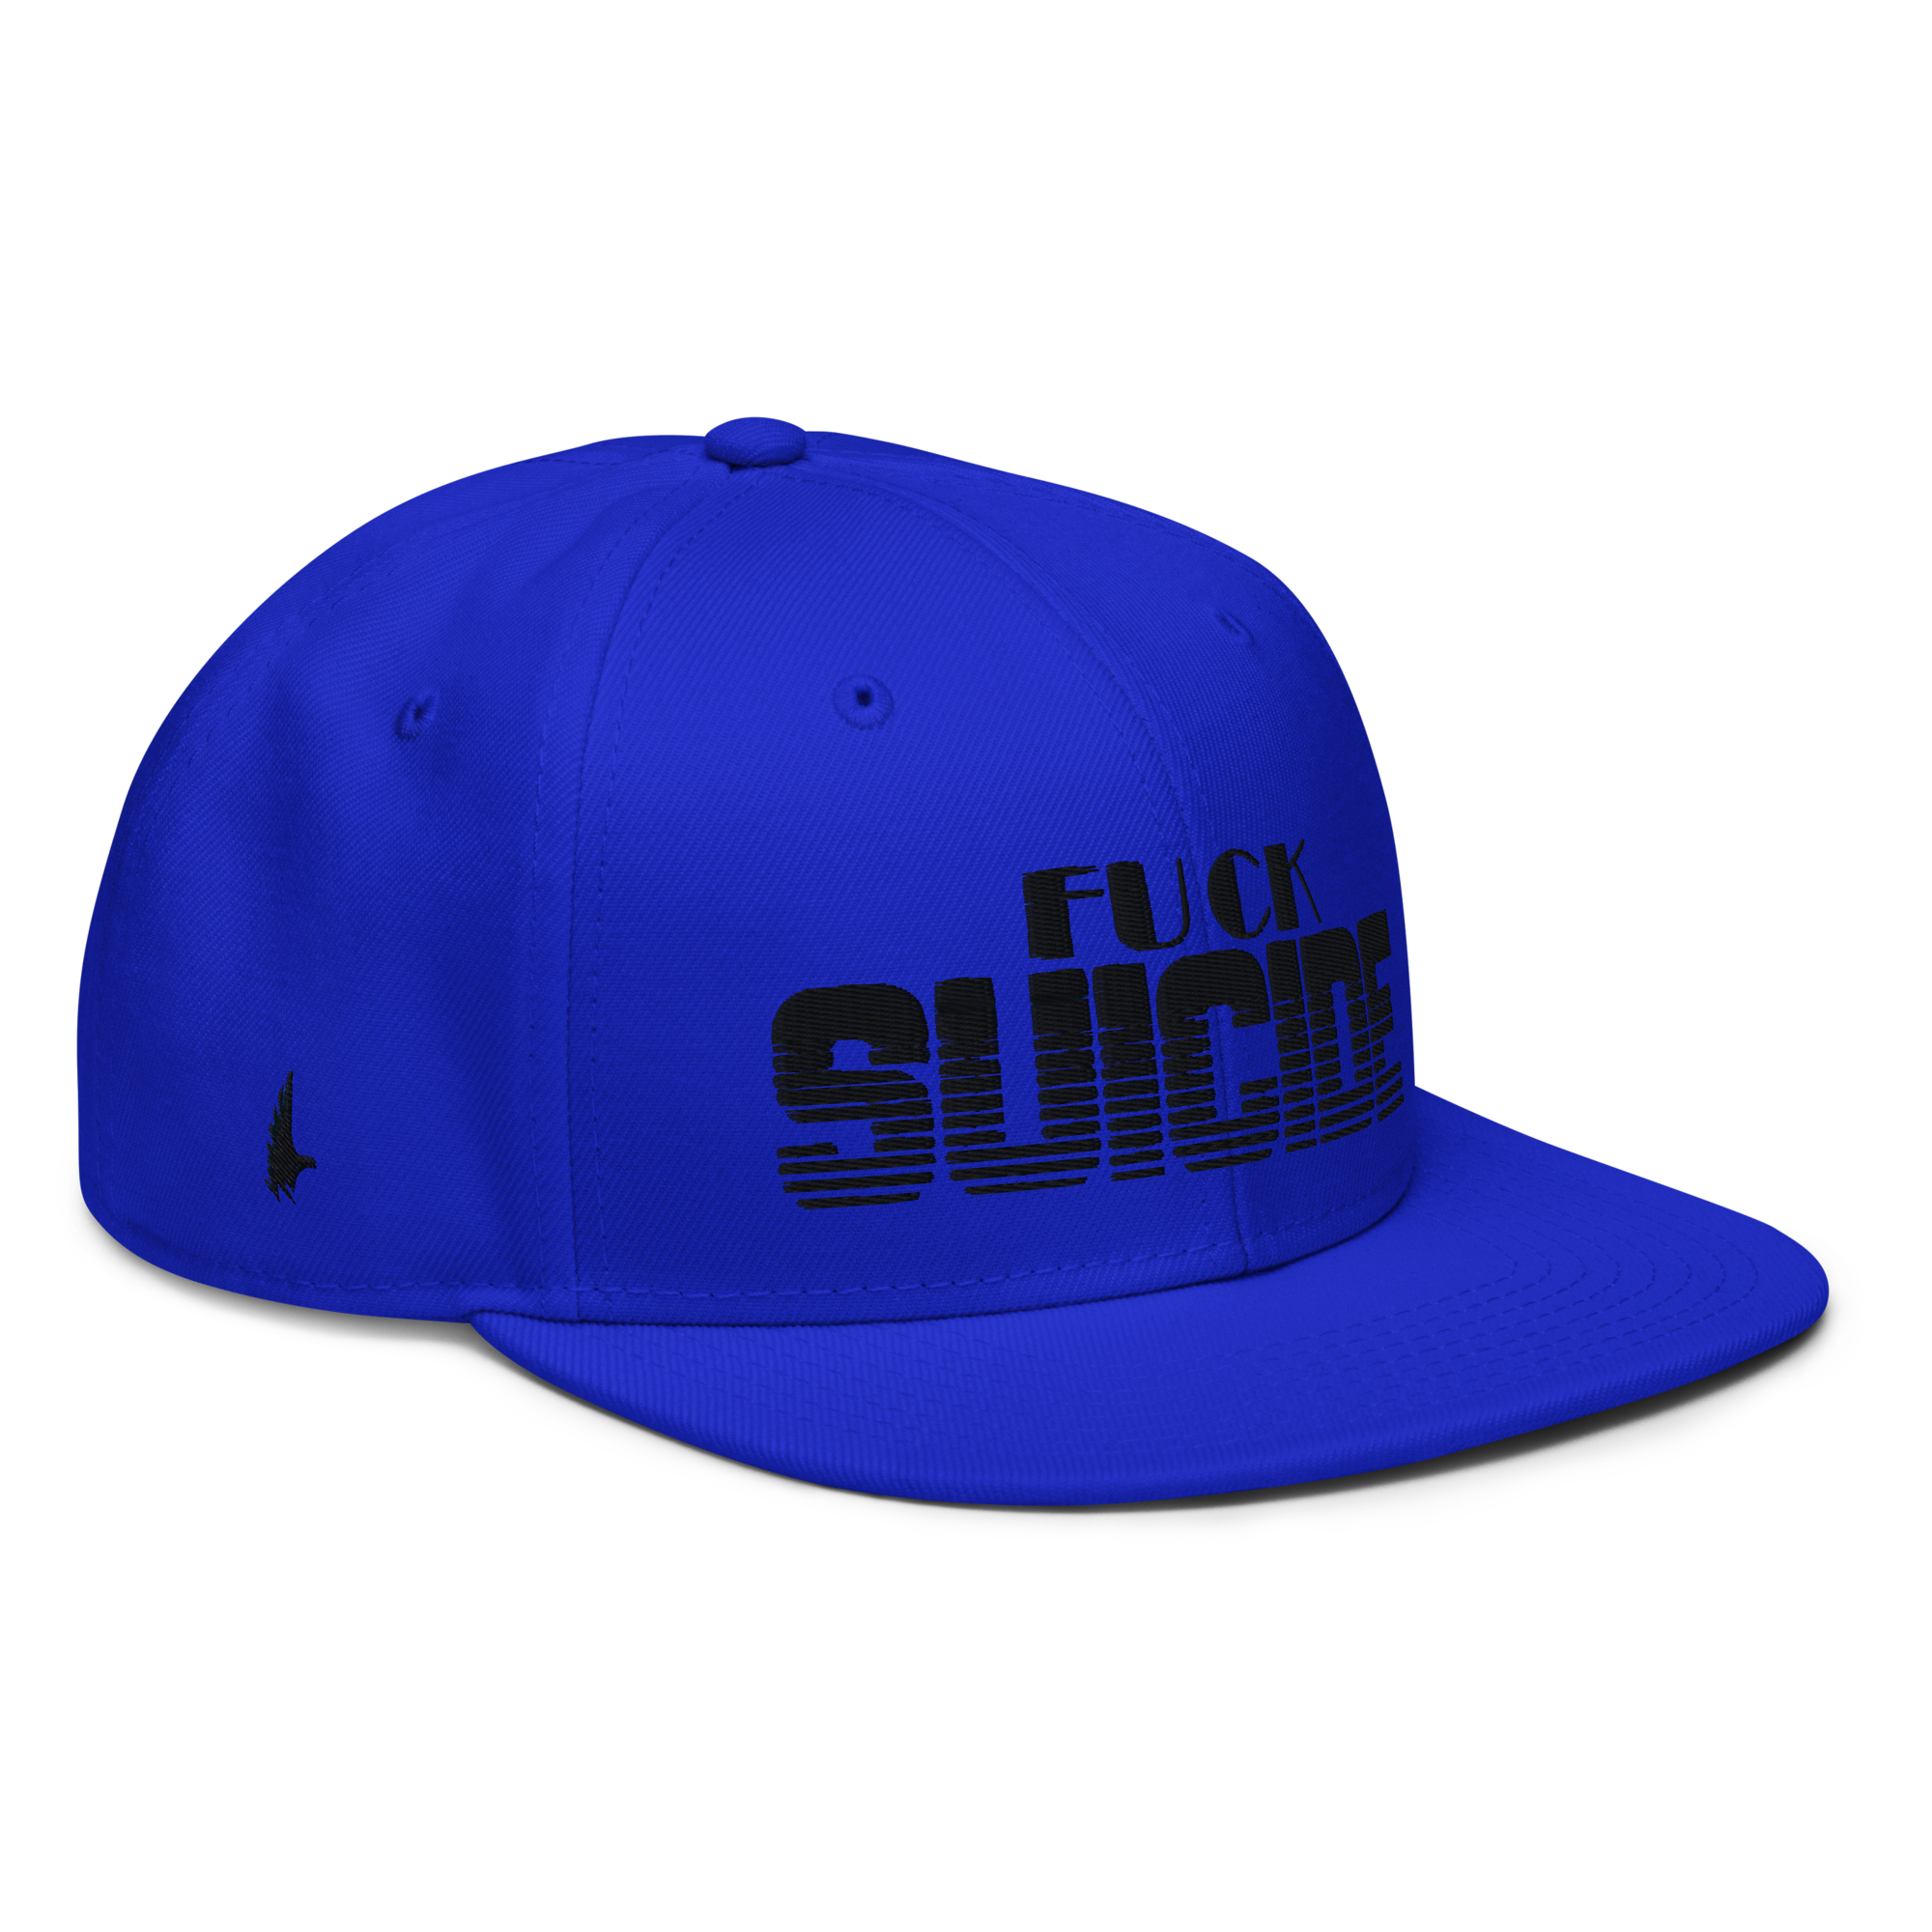 Fk Suicide Snapback Hat - Blue / Black OS - Loyalty Vibes